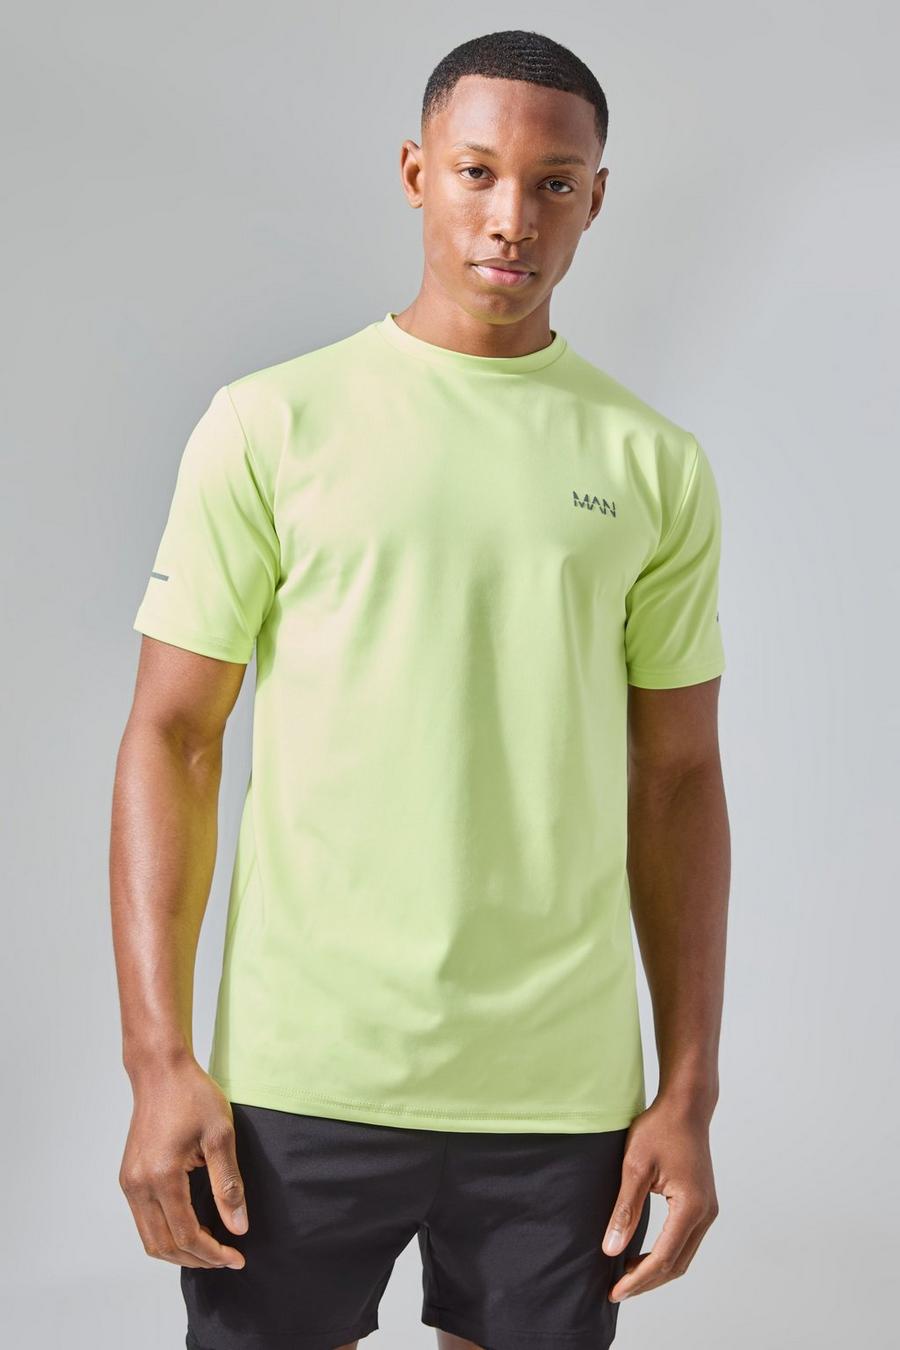 Man Active Performance T-Shirt, Green